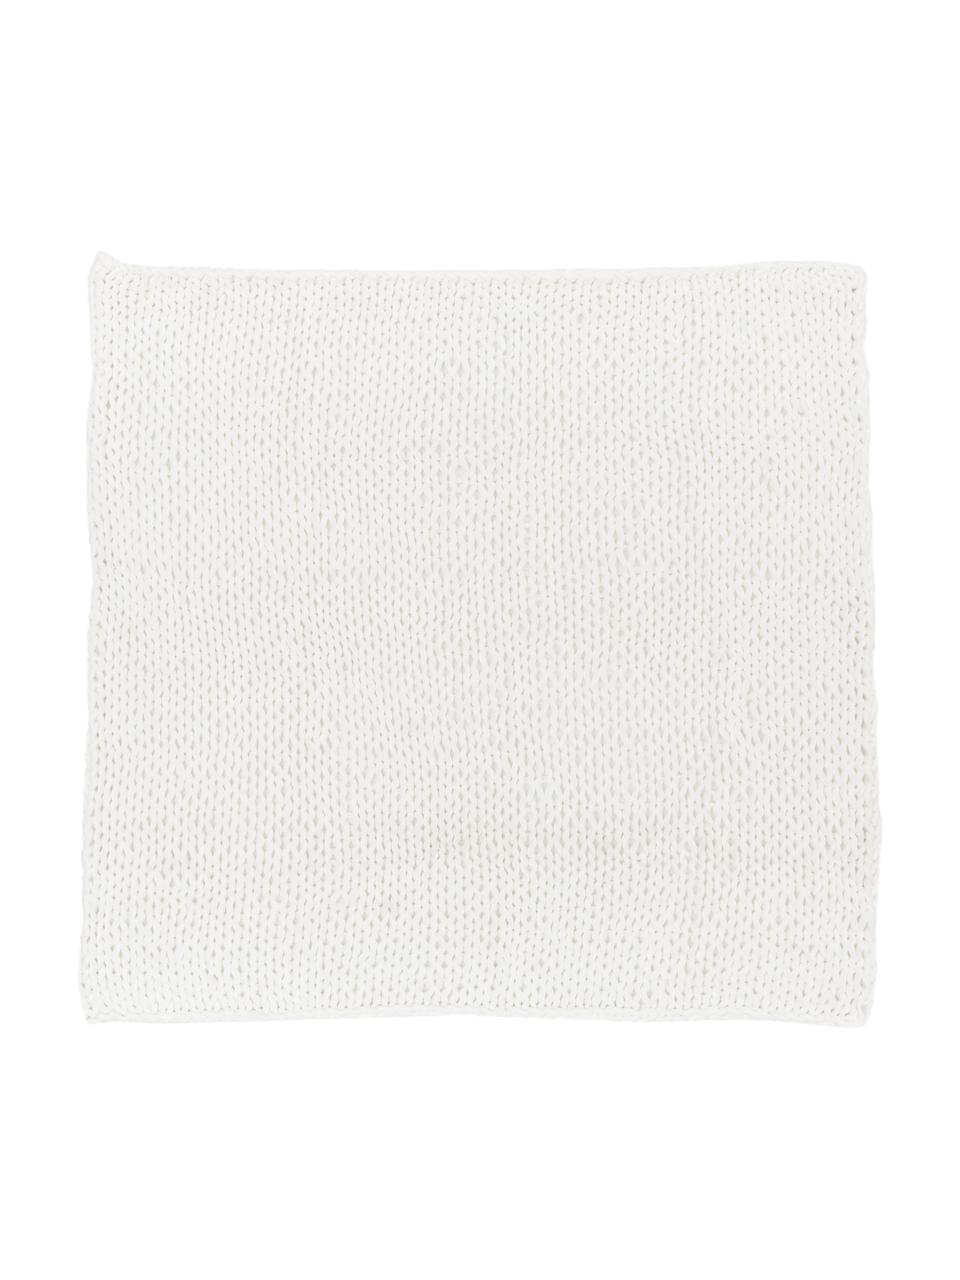 Plaid a maglia Adyna, 100% acrilico, Bianco, 150 x 200 cm